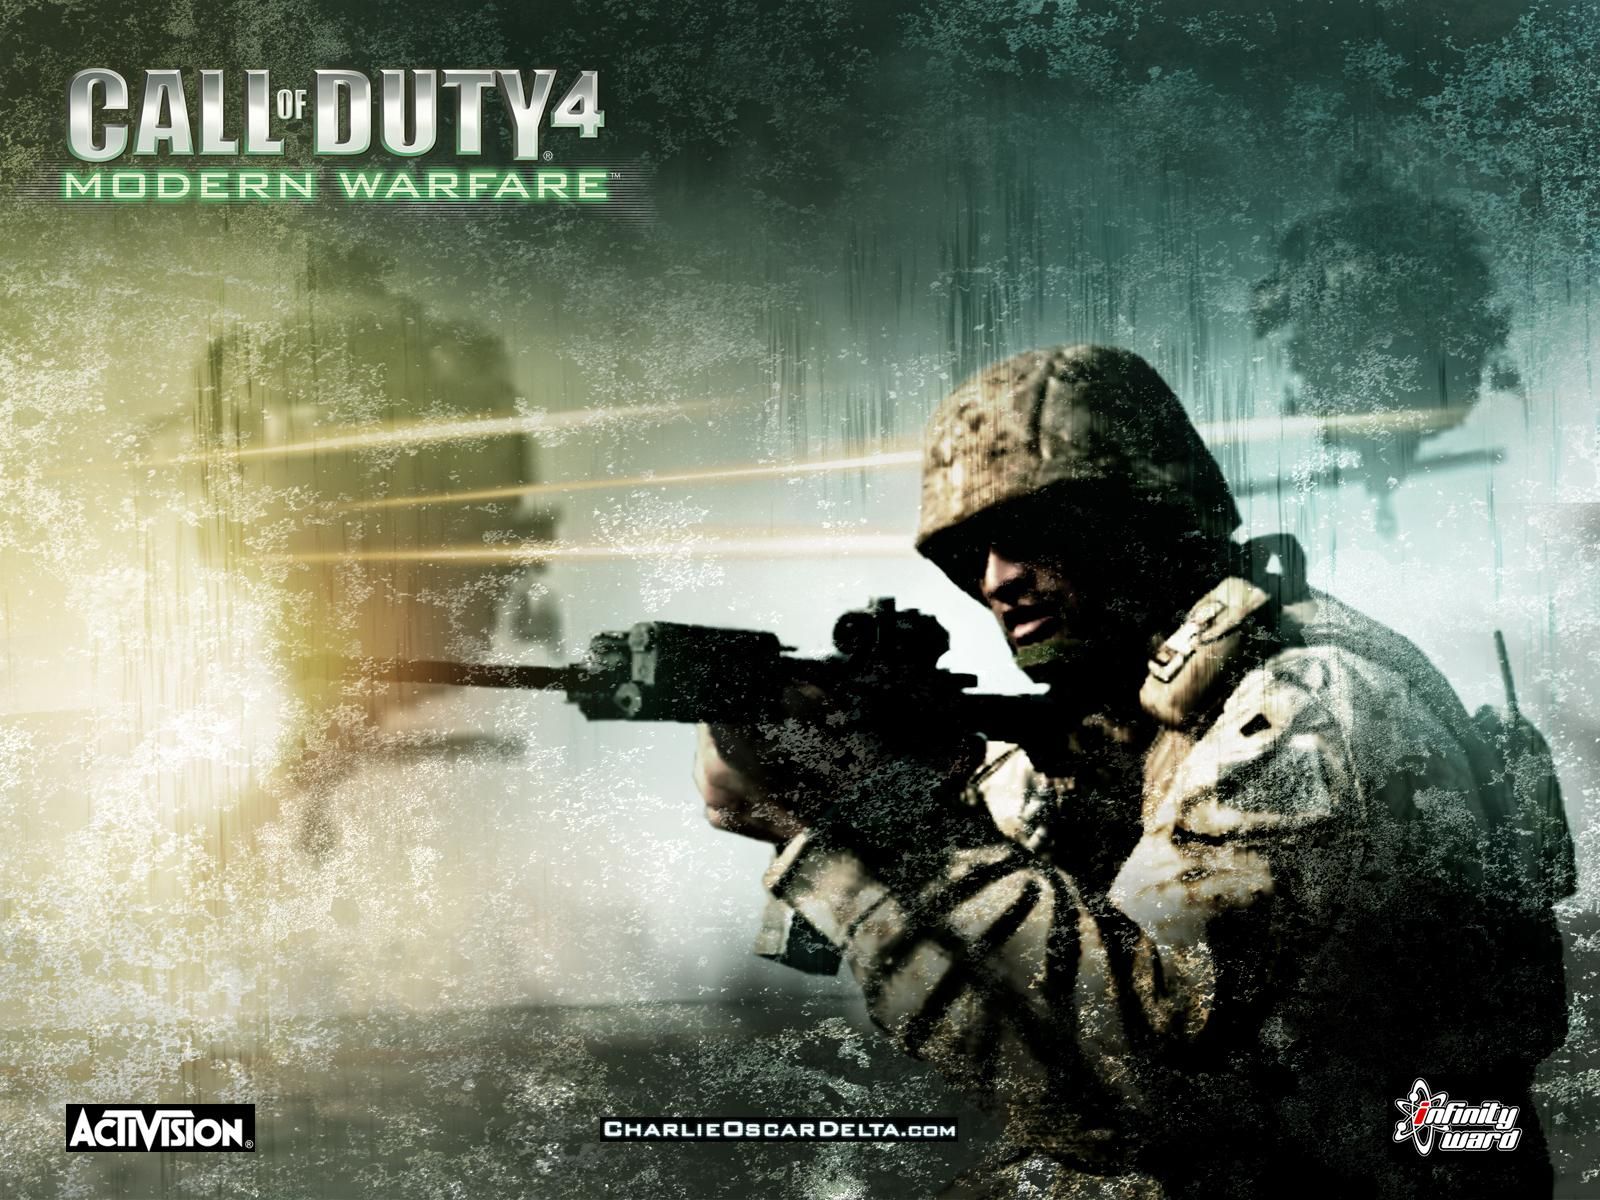 Papel De Parede Call Of Duty 4 Wallpaper Para Download No Celular Ou